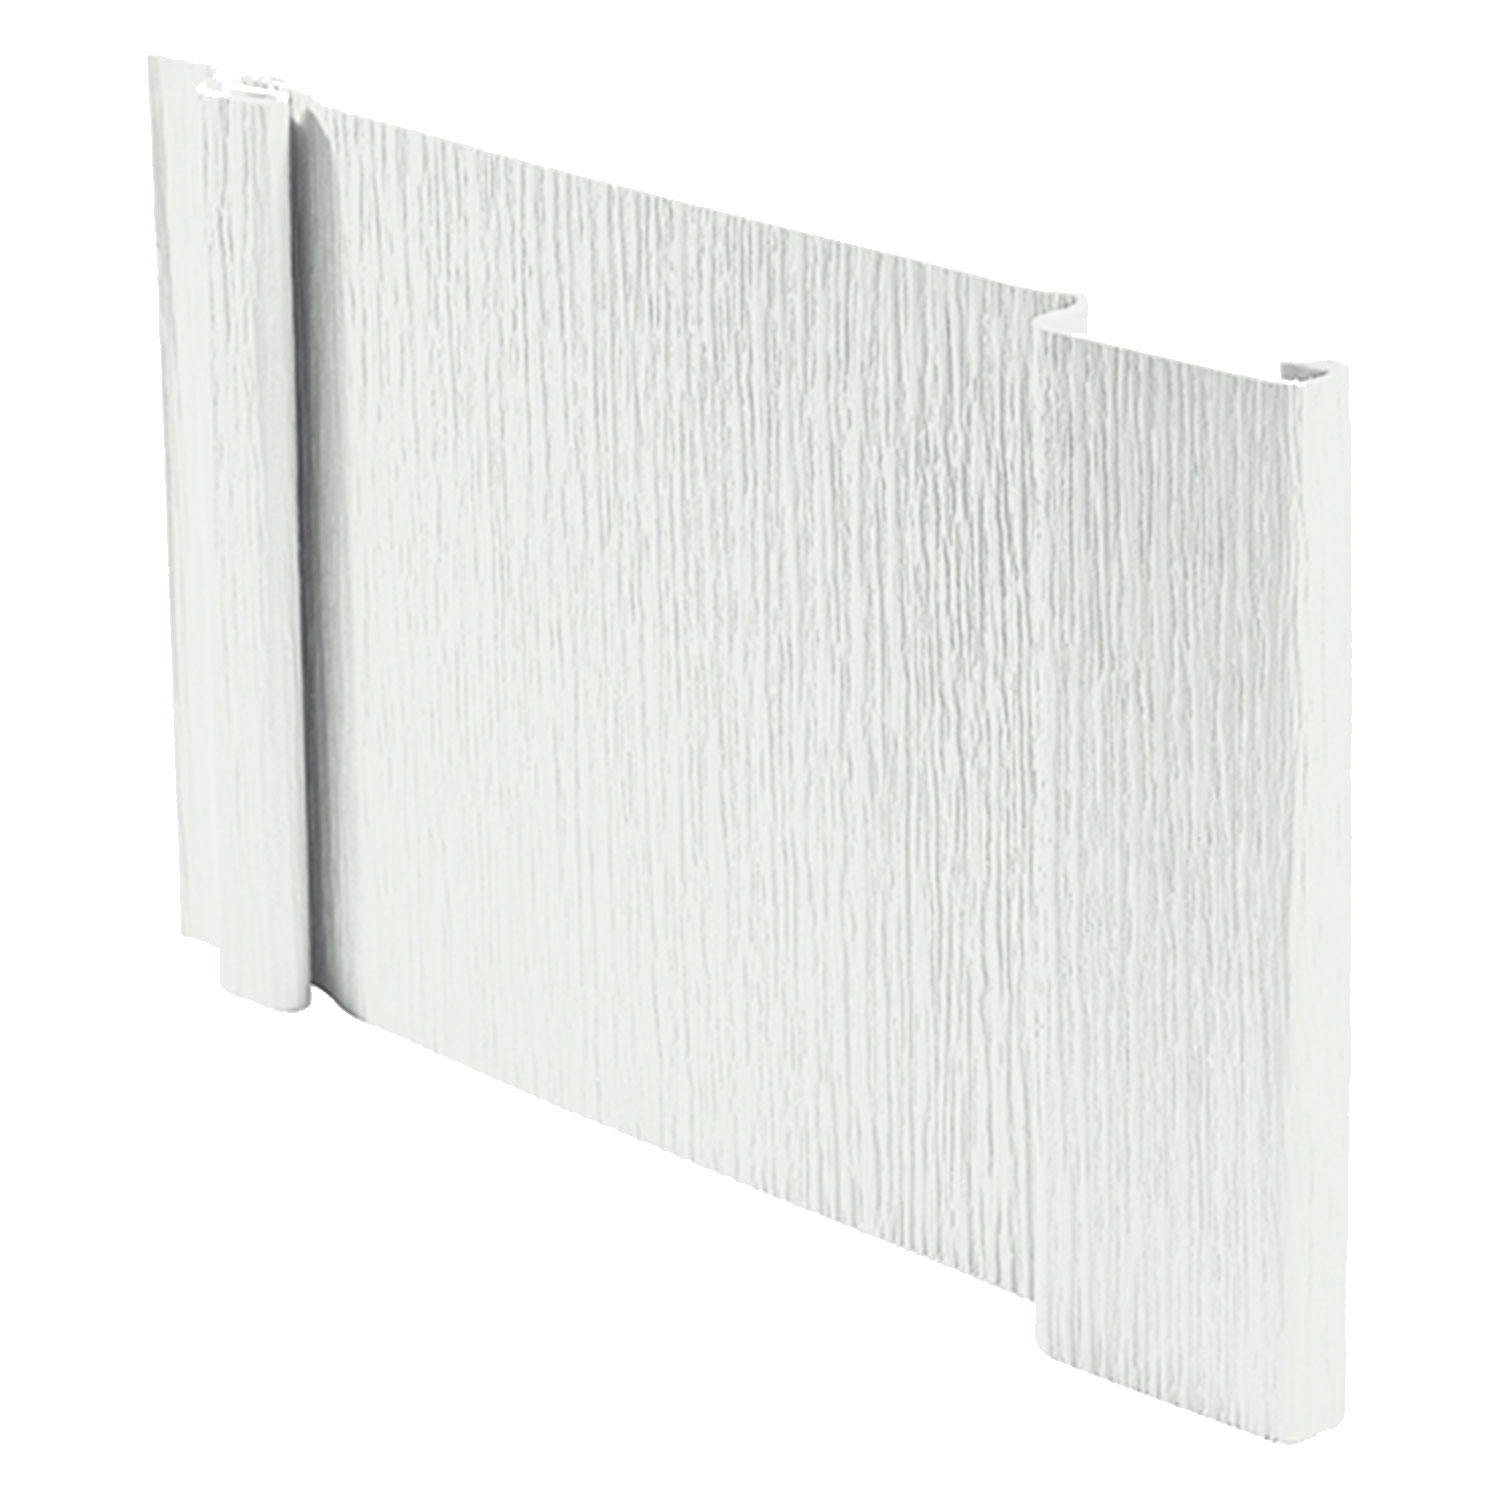 White Birch Board Siding